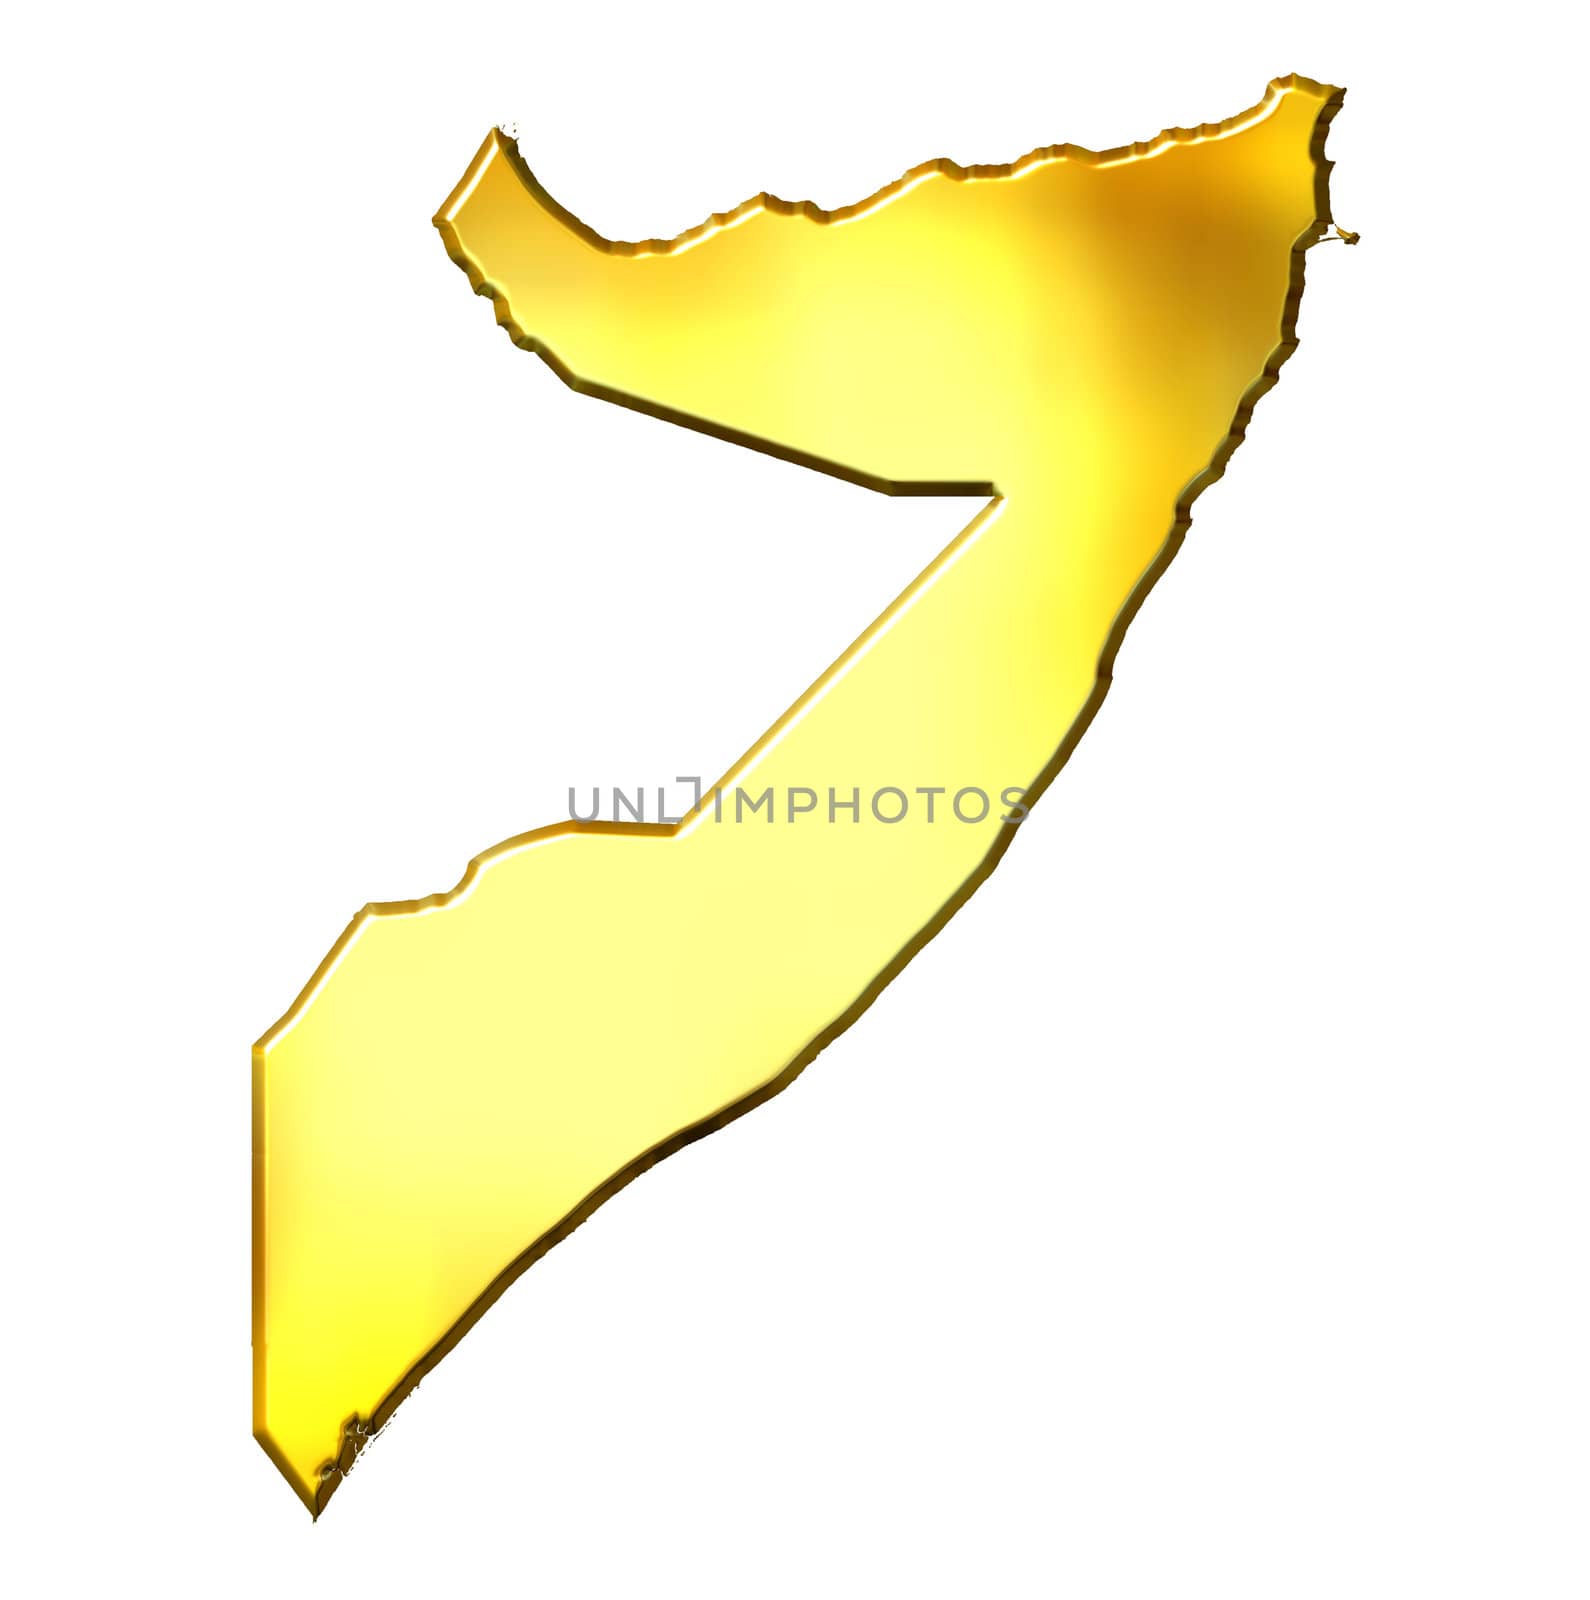 Somalia 3d golden map isolated in white